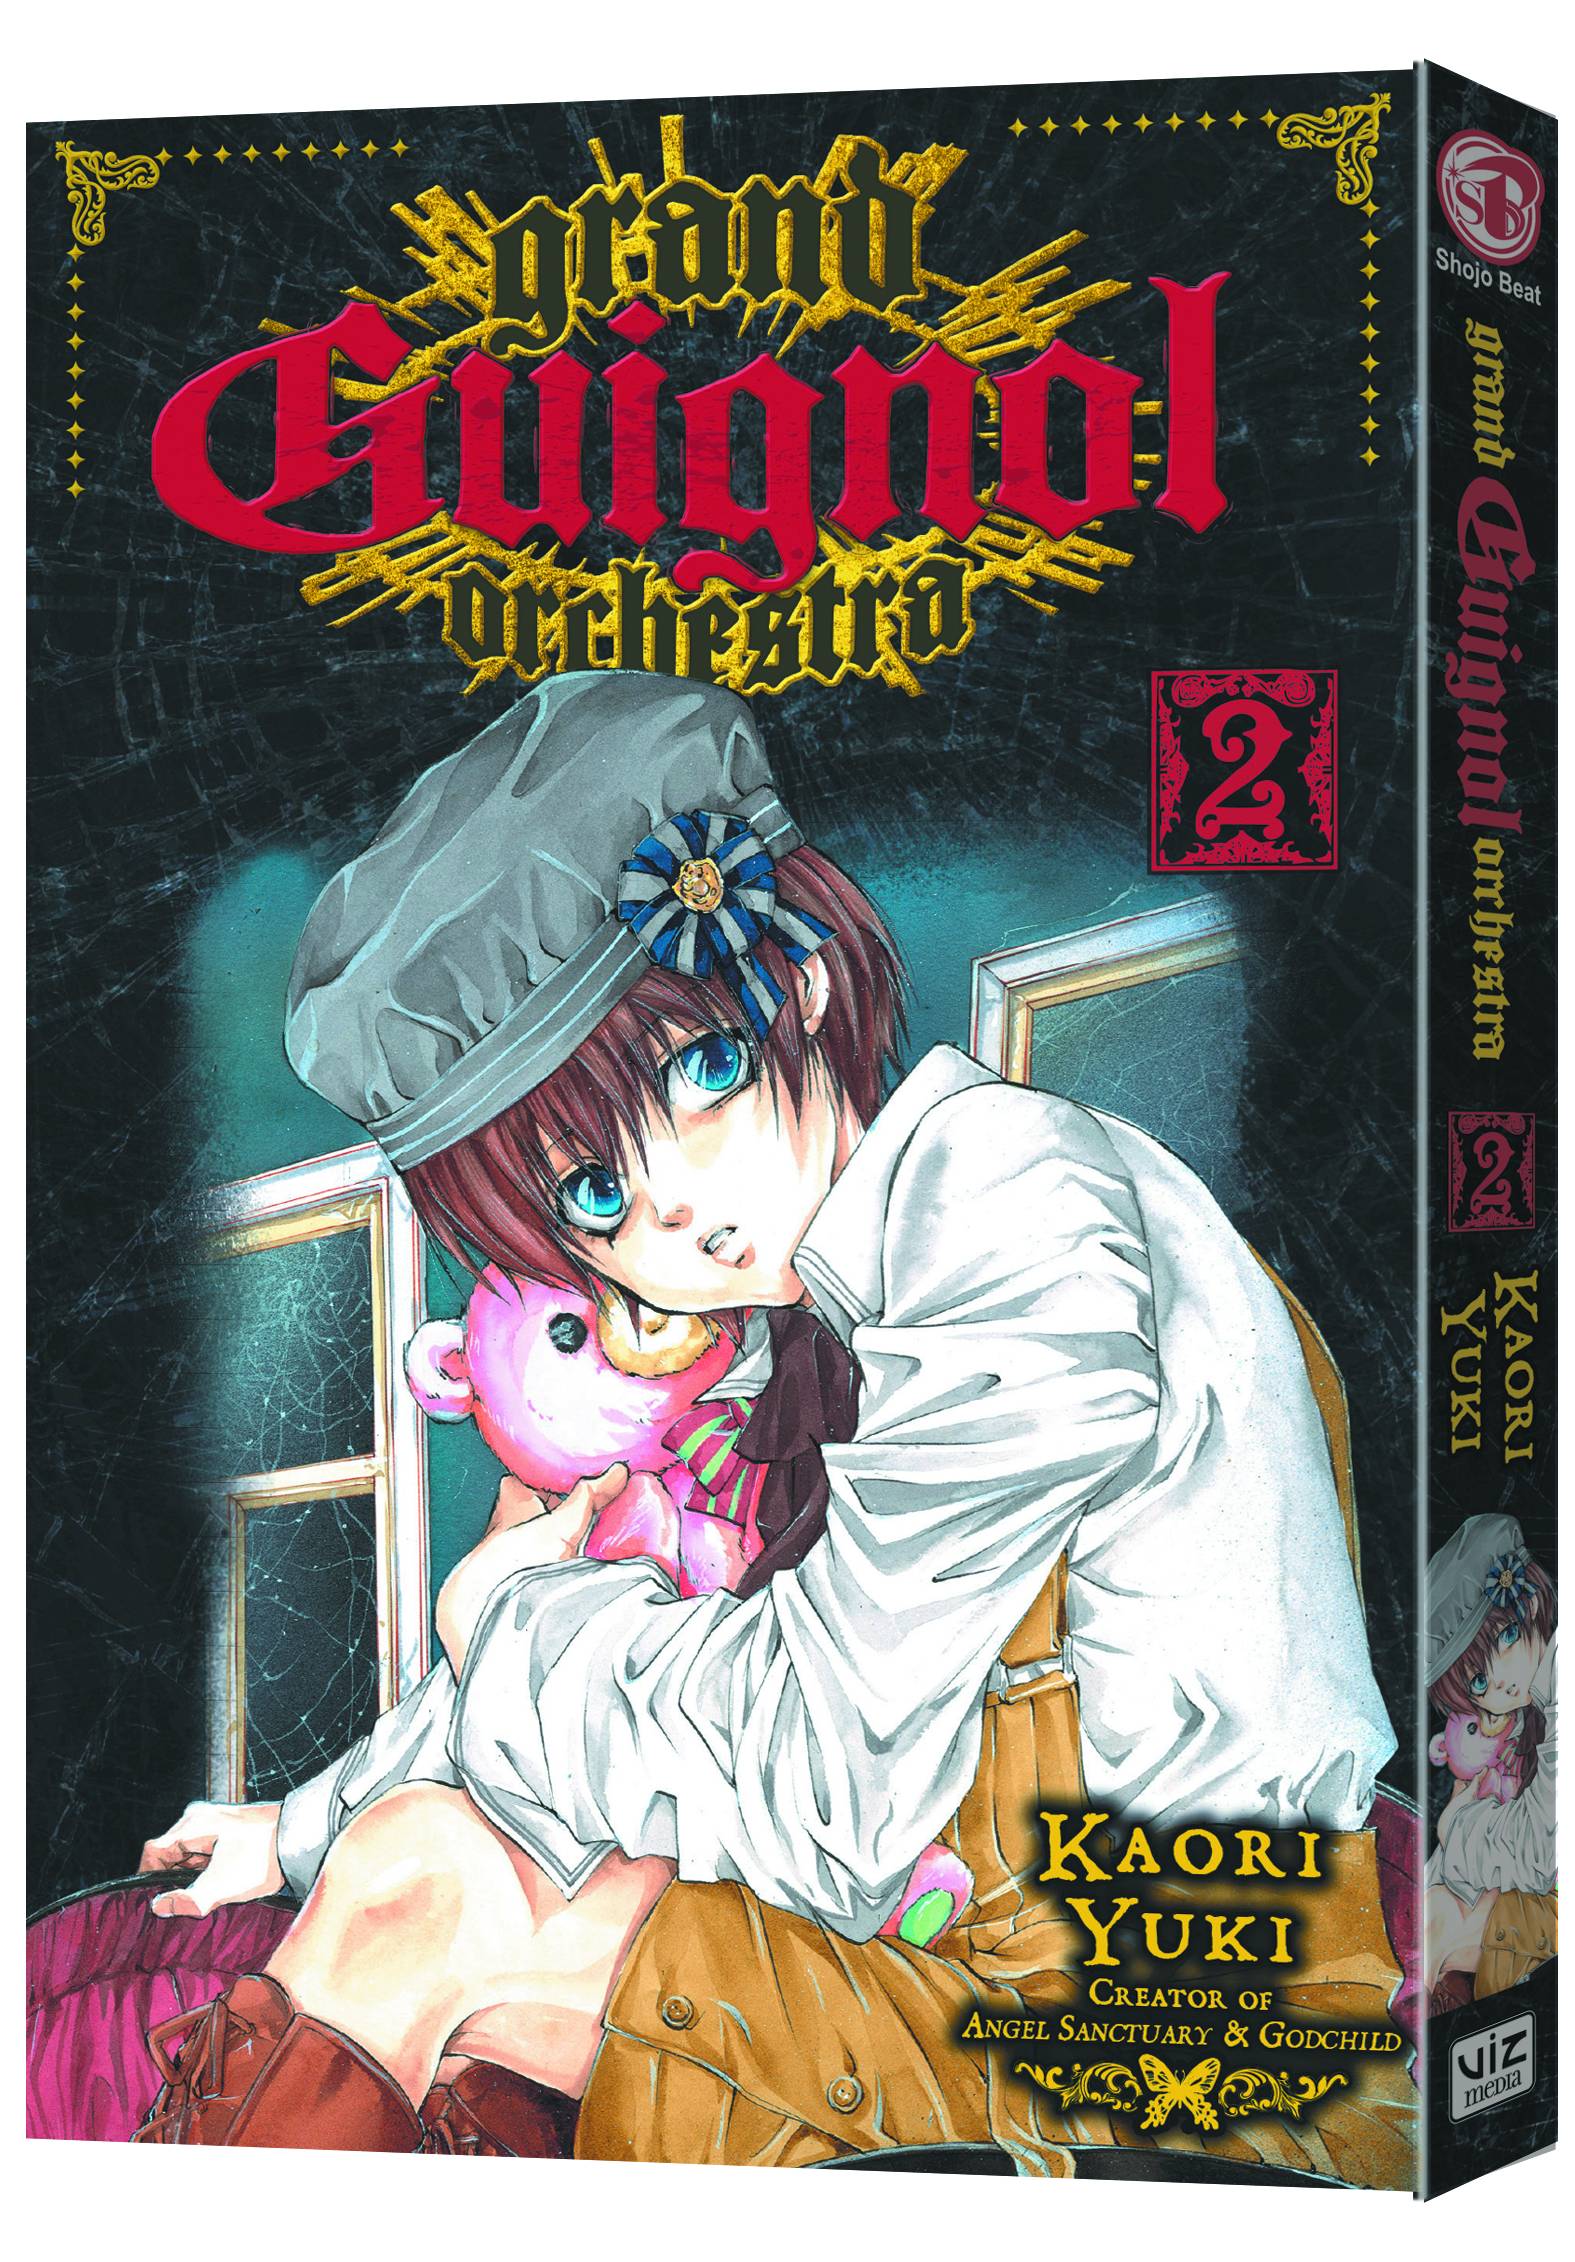 Grand Guignol Orchestra Manga Volume 2